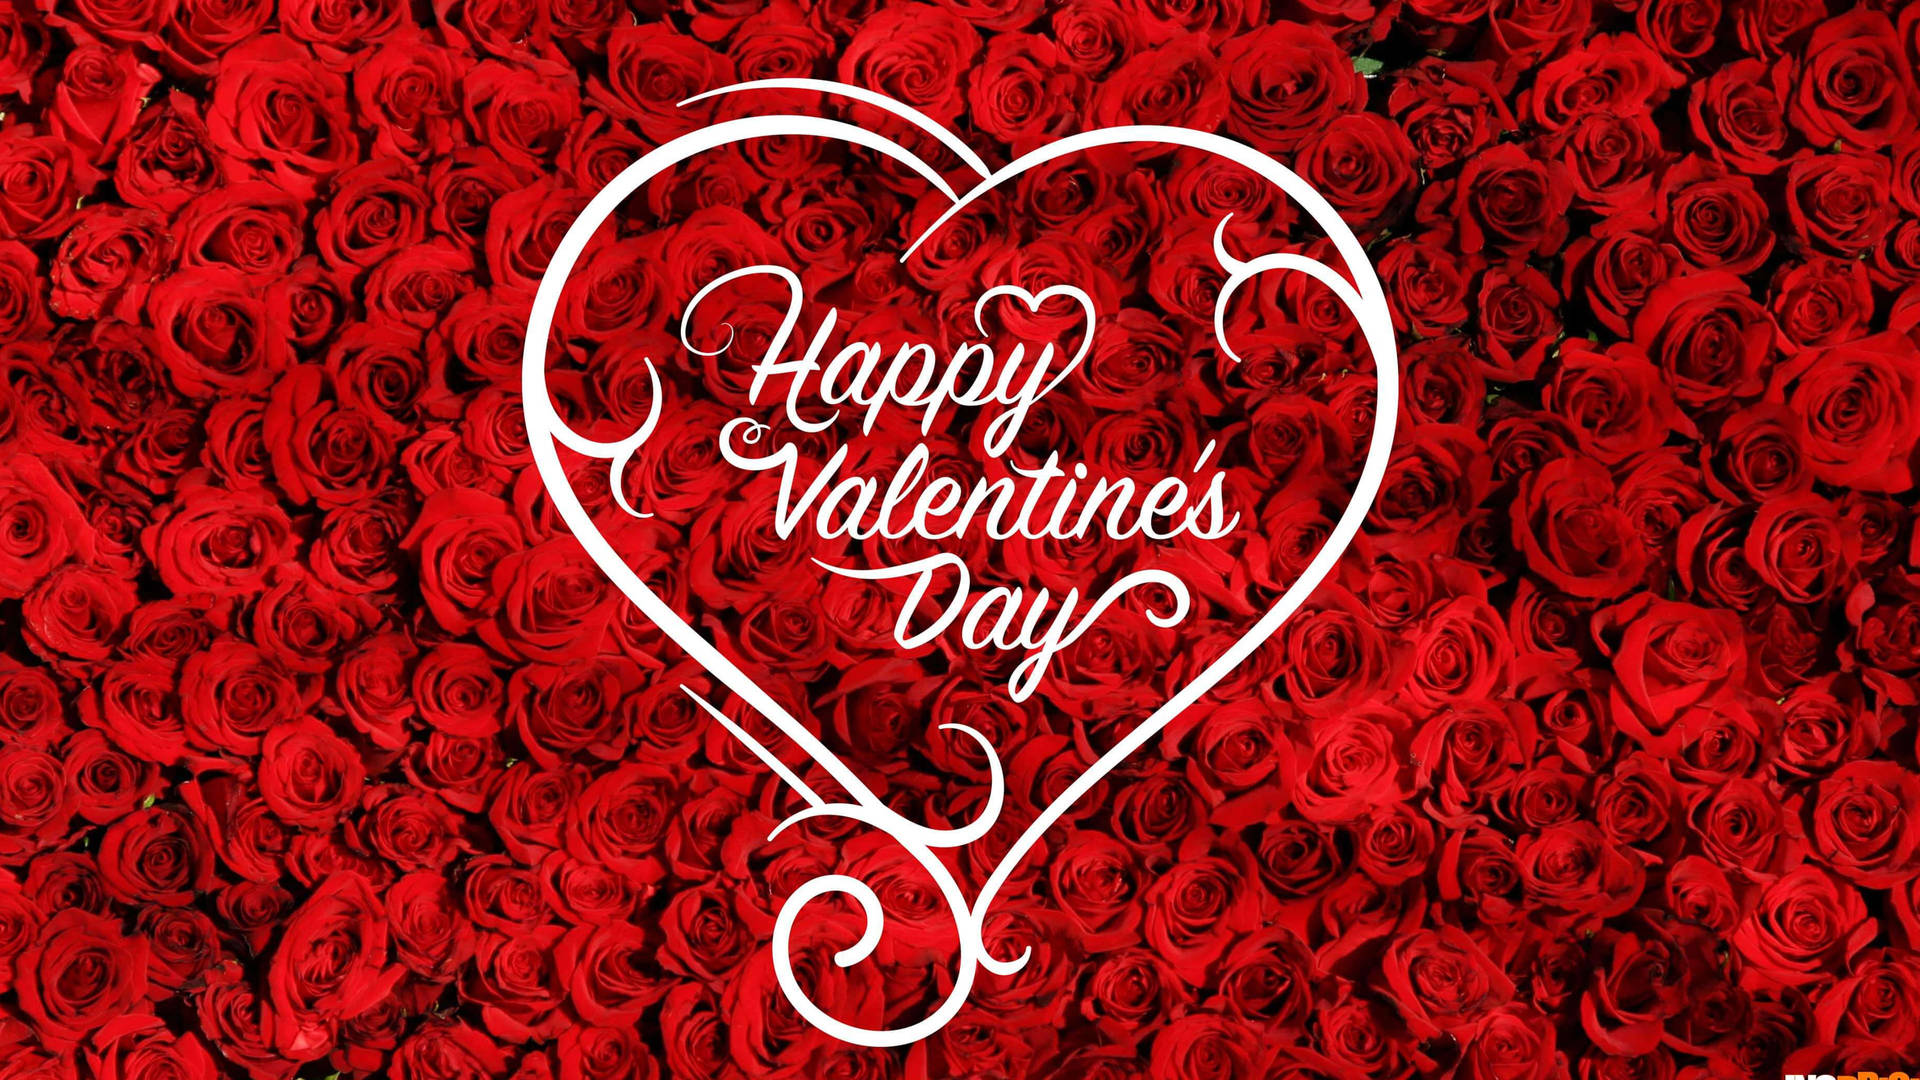 Happy Valentine’s Day Red Roses Desktop Background